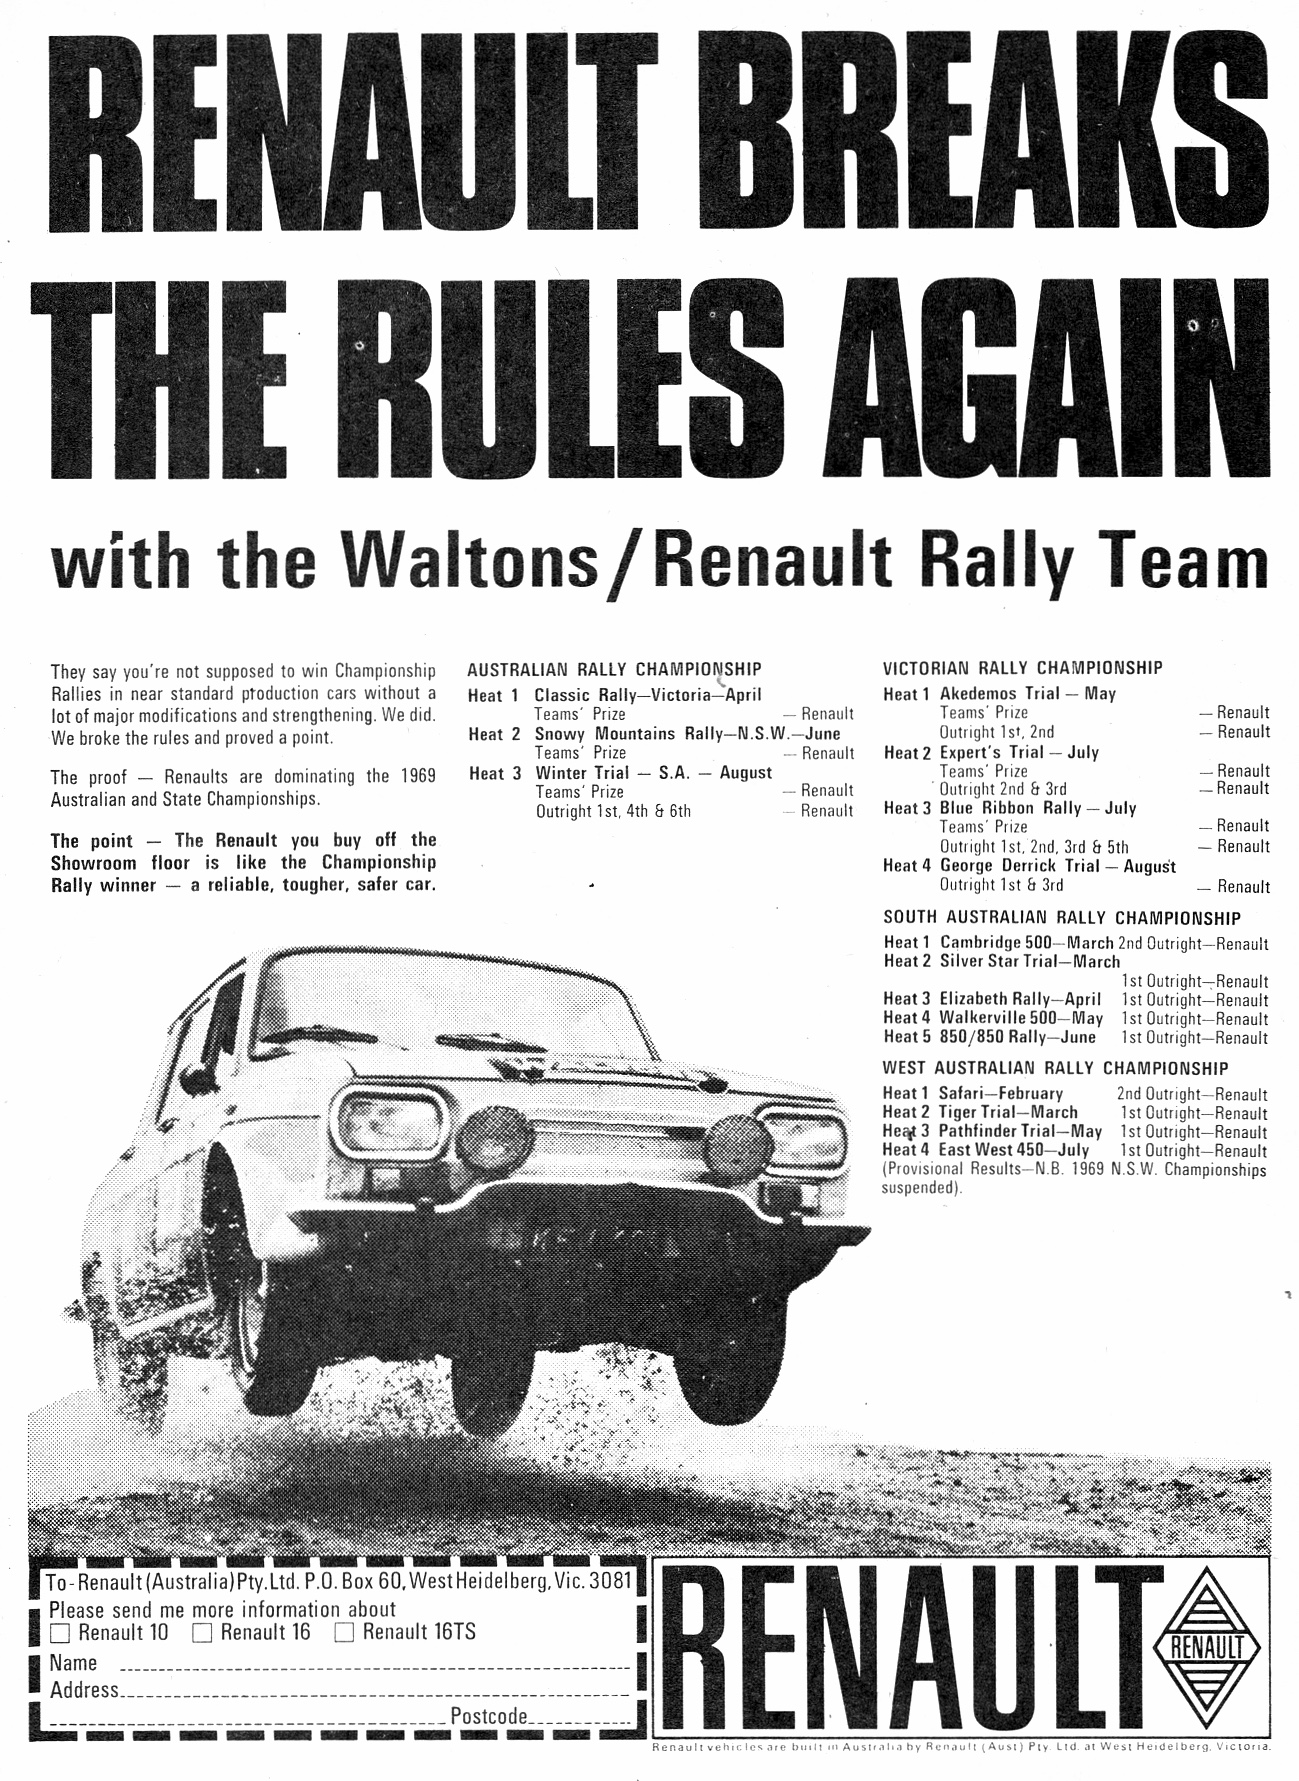 1970 Renault 10 Sedan Waltons Rally Team